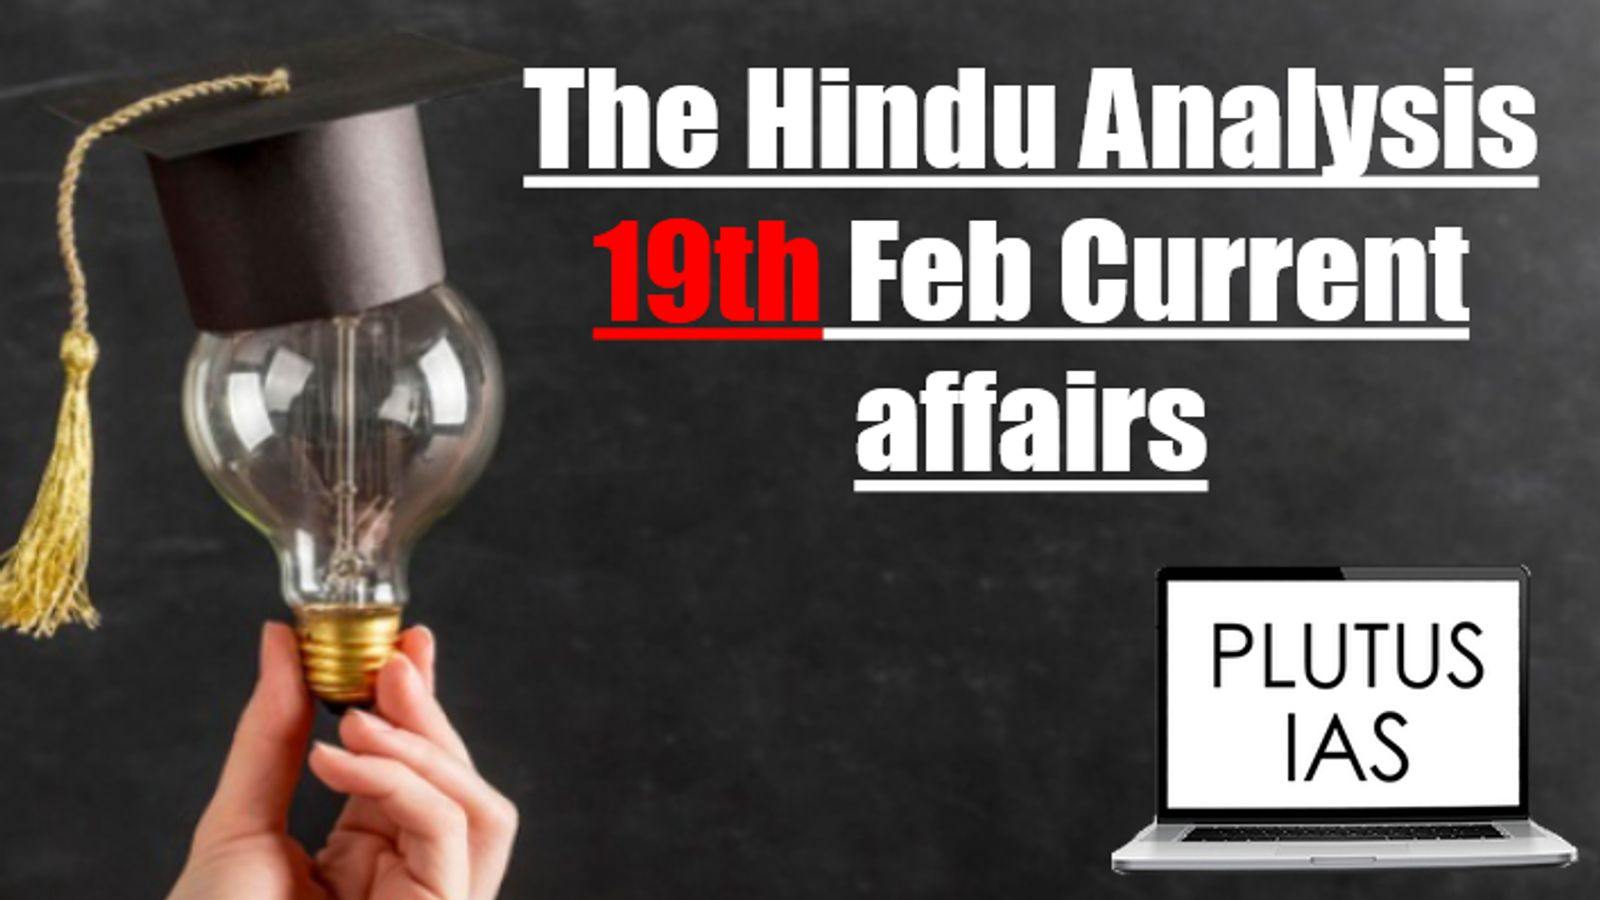 The Hindu Analysis 19th February